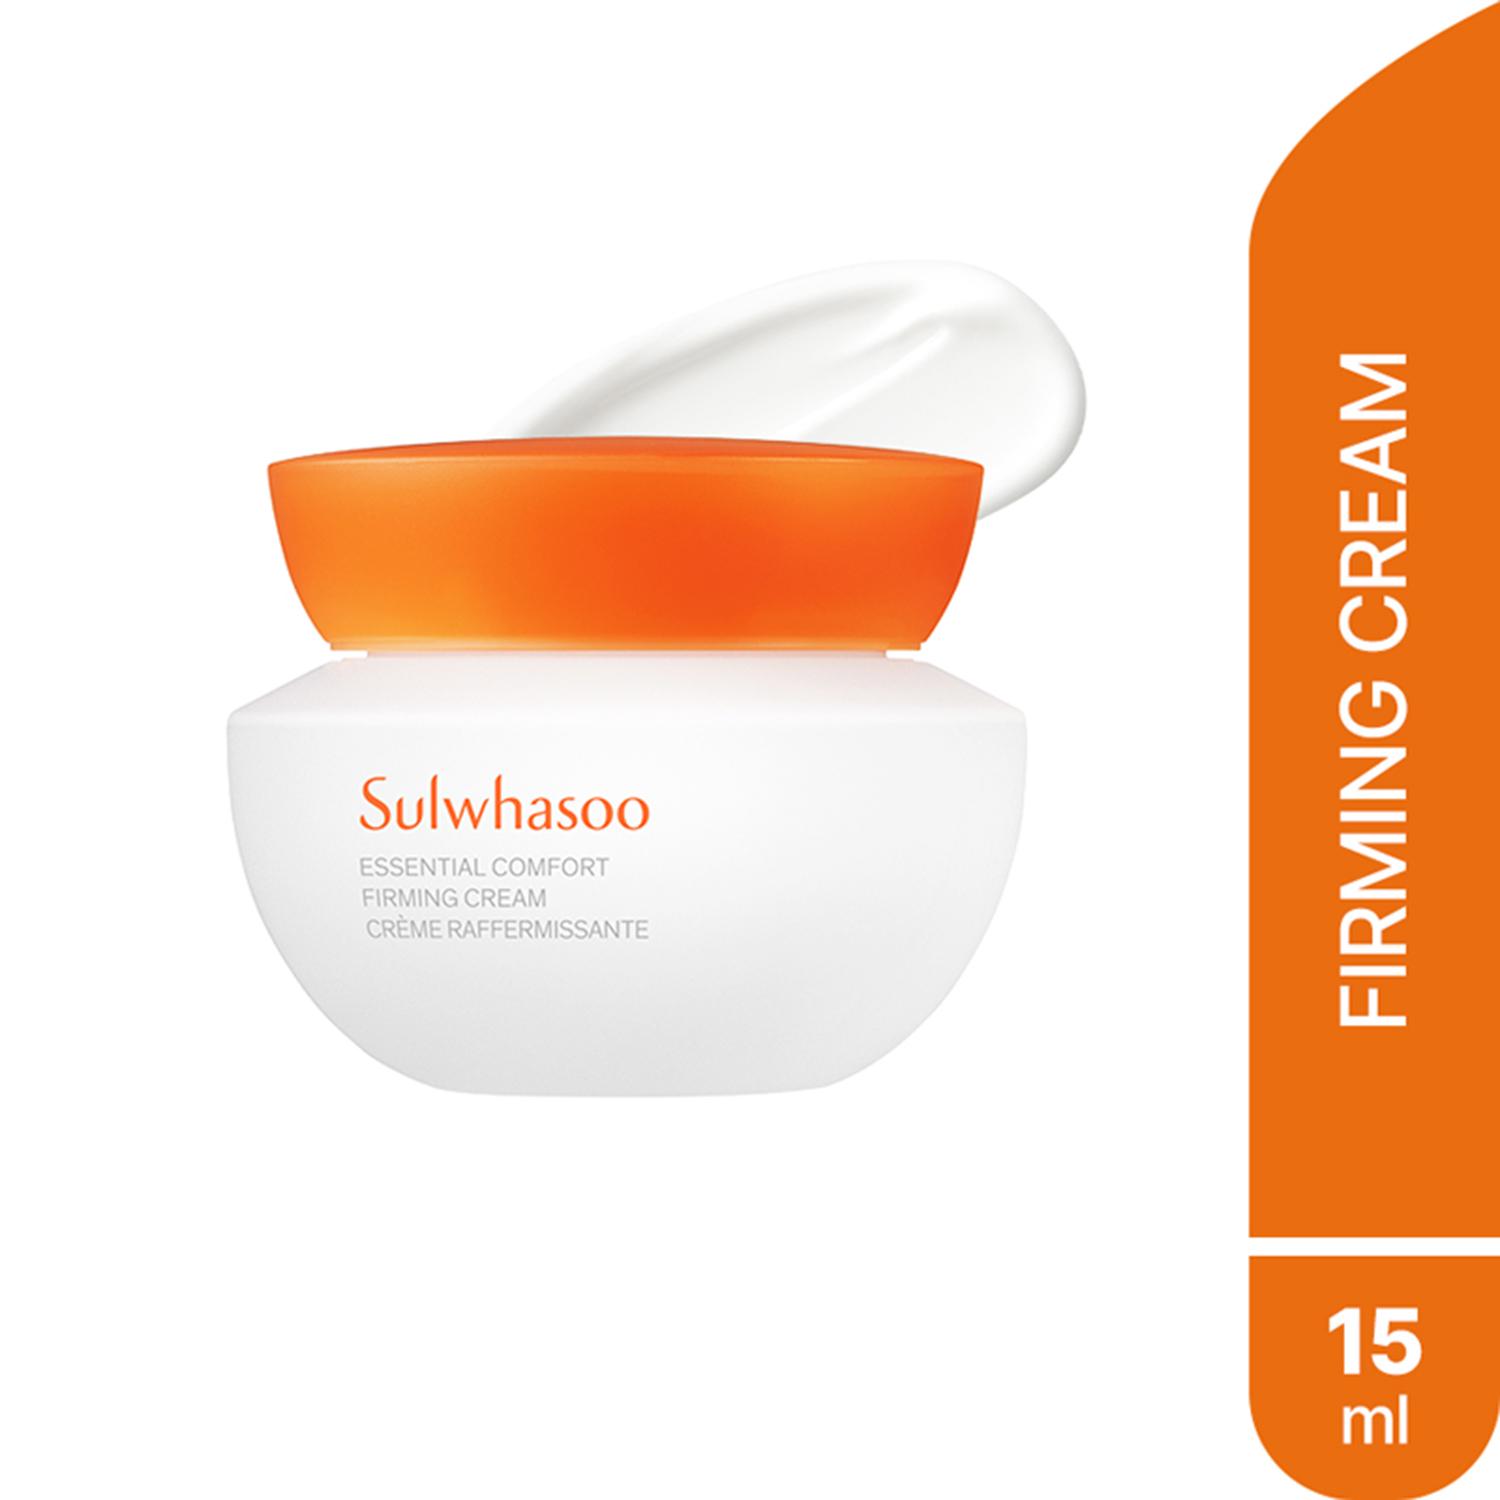 Sulwhasoo | Sulwhasoo Essential Comfort Firming Cream (50ml)